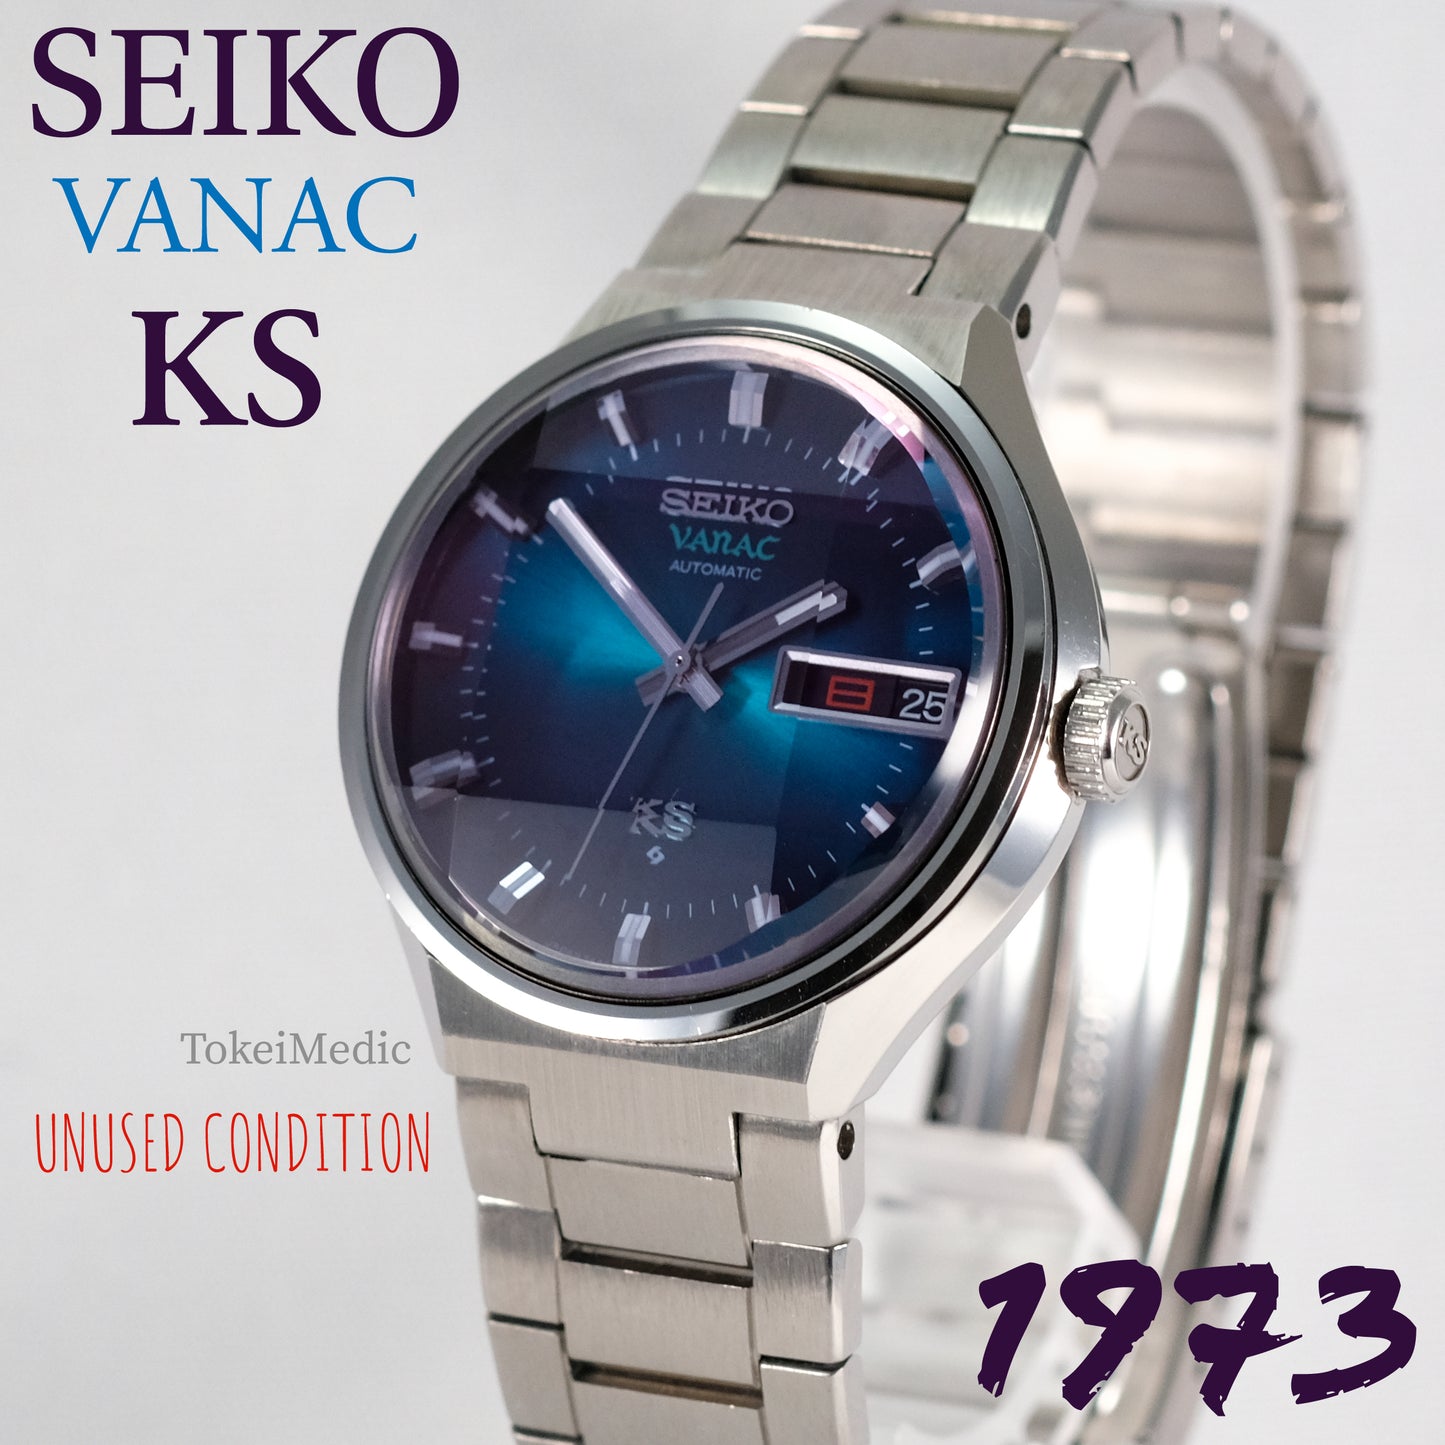 1973 Seiko Vanac KS 5626-7210